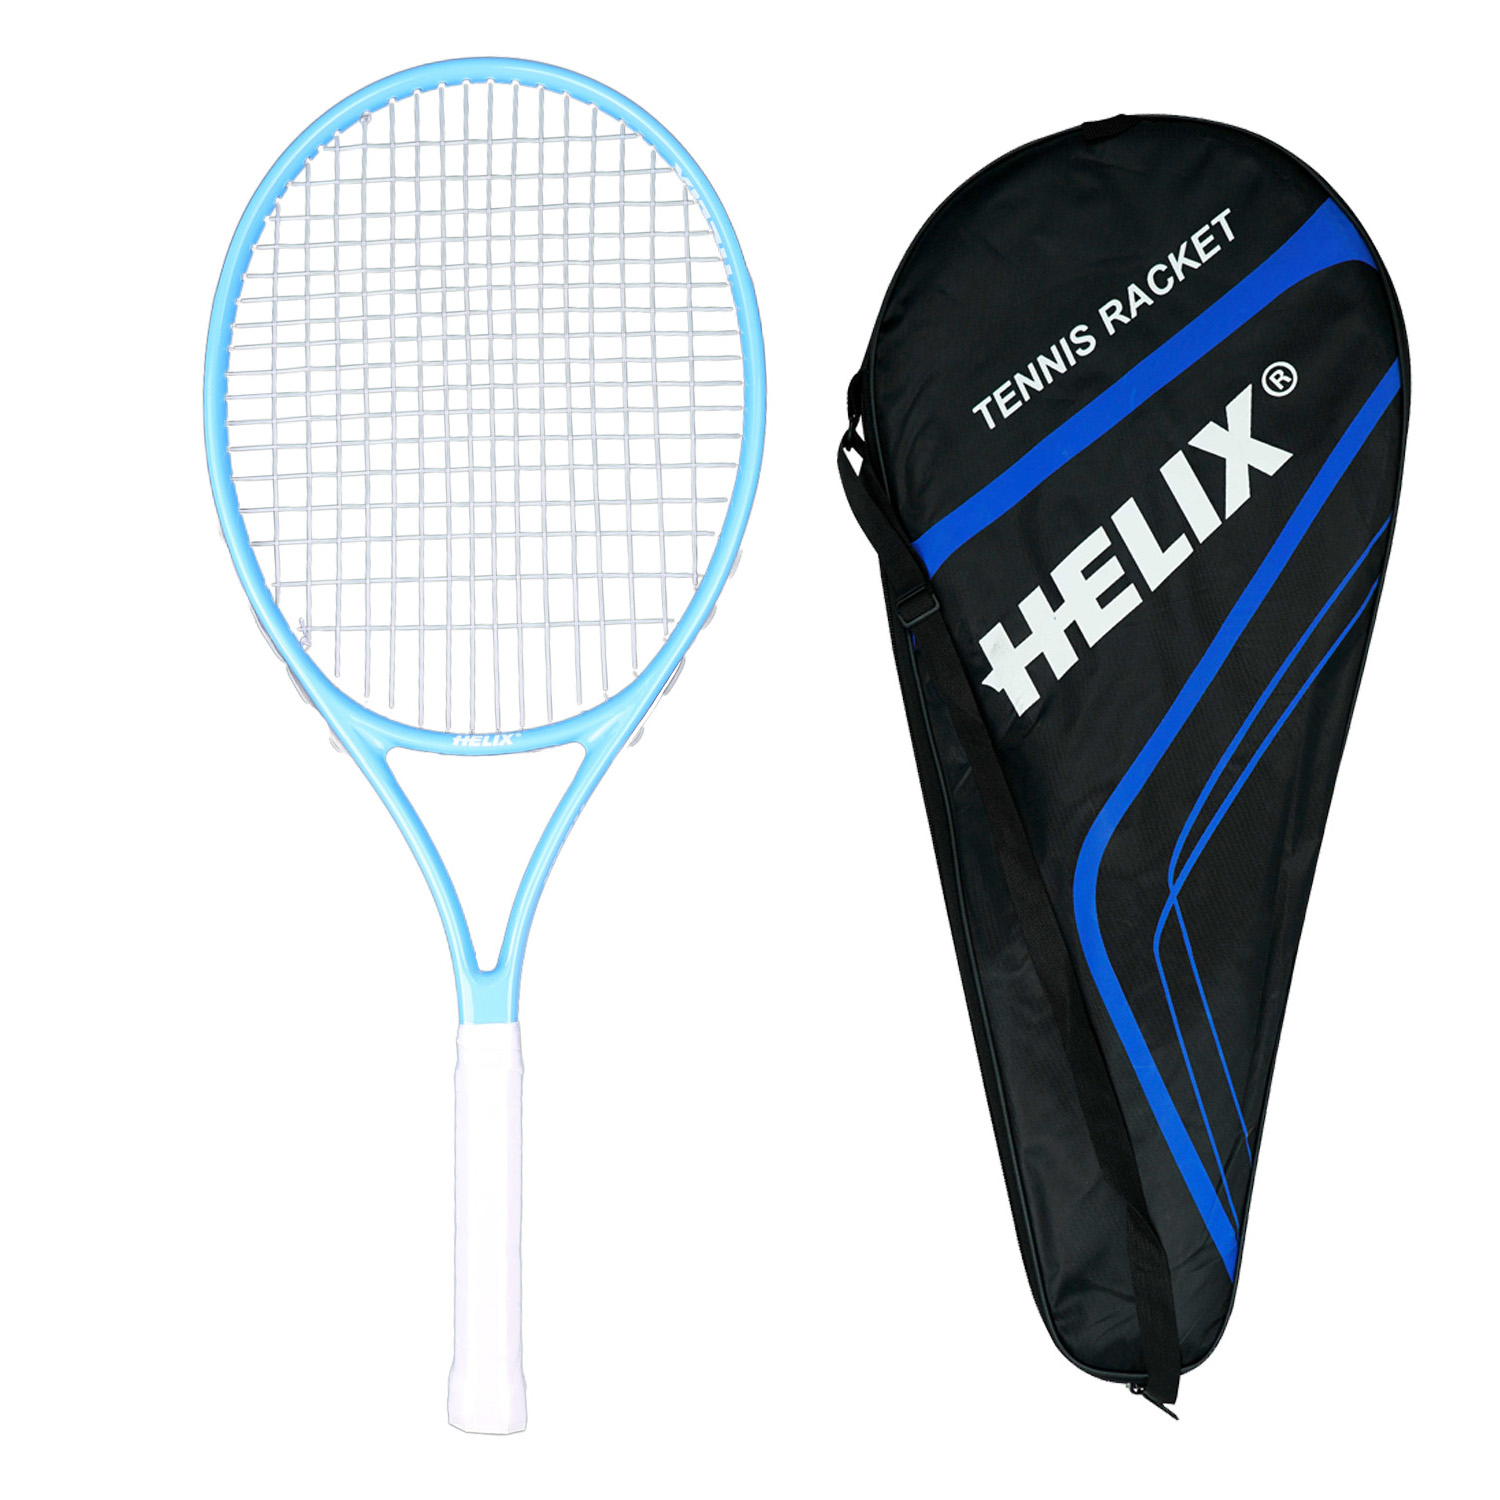 Helix Power Tenis Raketi 25’’